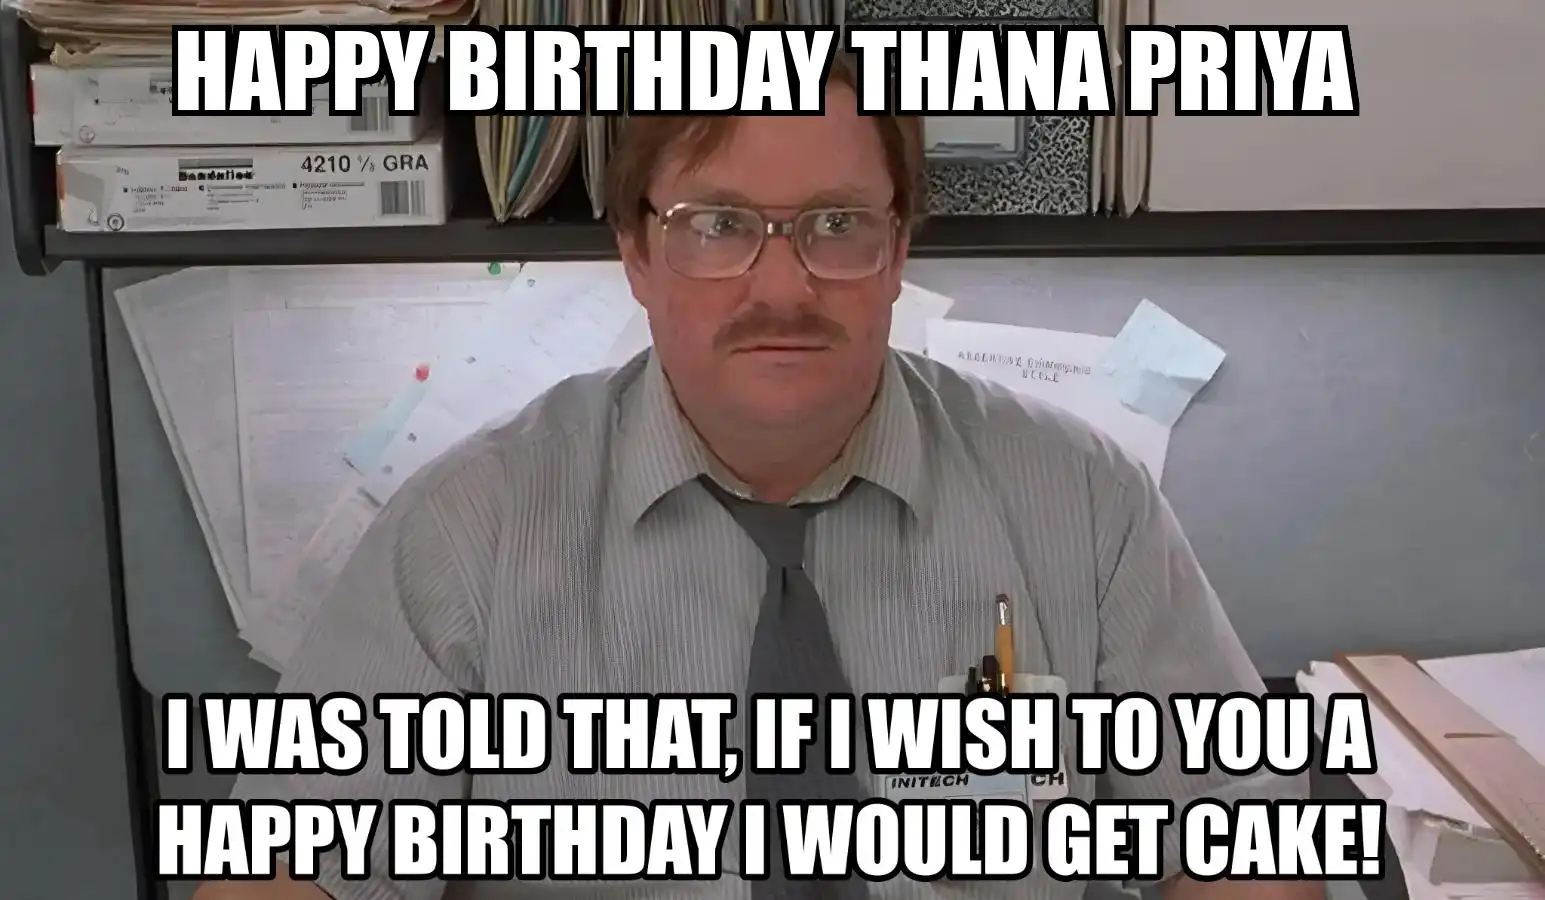 Happy Birthday Thana priya I Would Get A Cake Meme